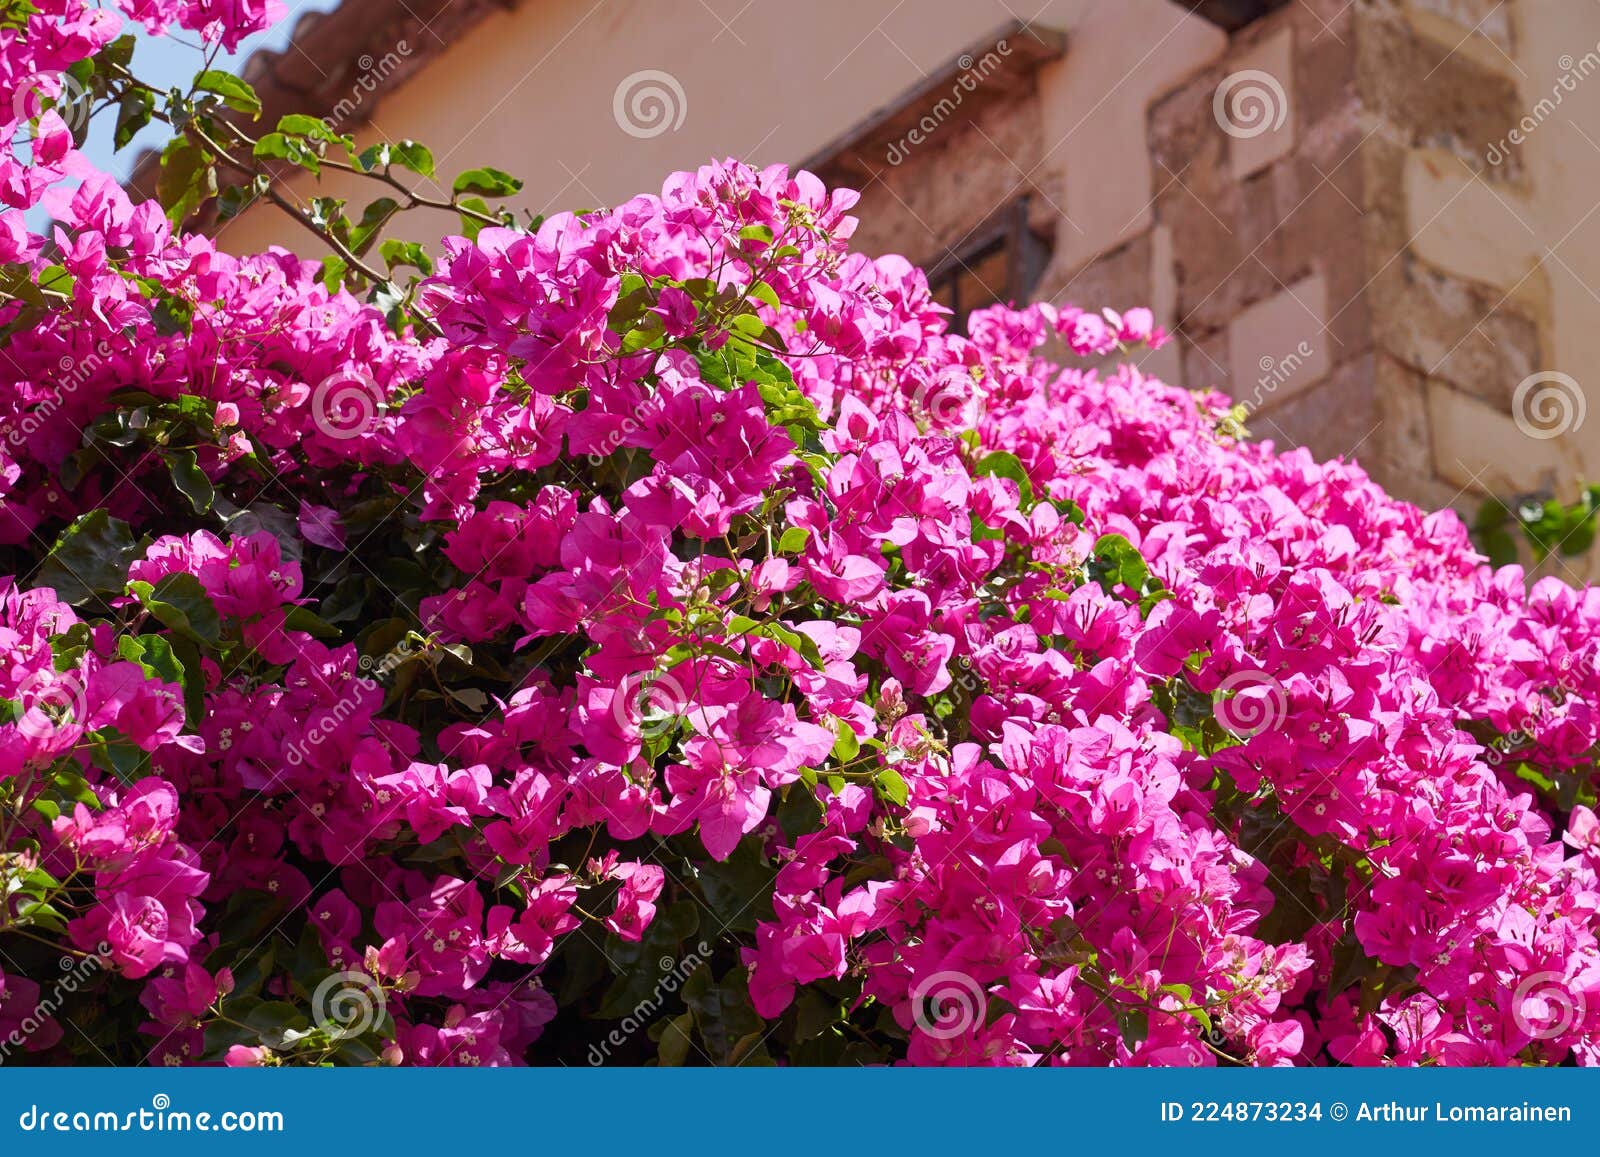 Bougainvillea Or Bougavillia Exotic Flowering Shrub In Vibrant Pink Shade Of Colour In Crete Greece Stock Photo Image Of Purple Backgrounds